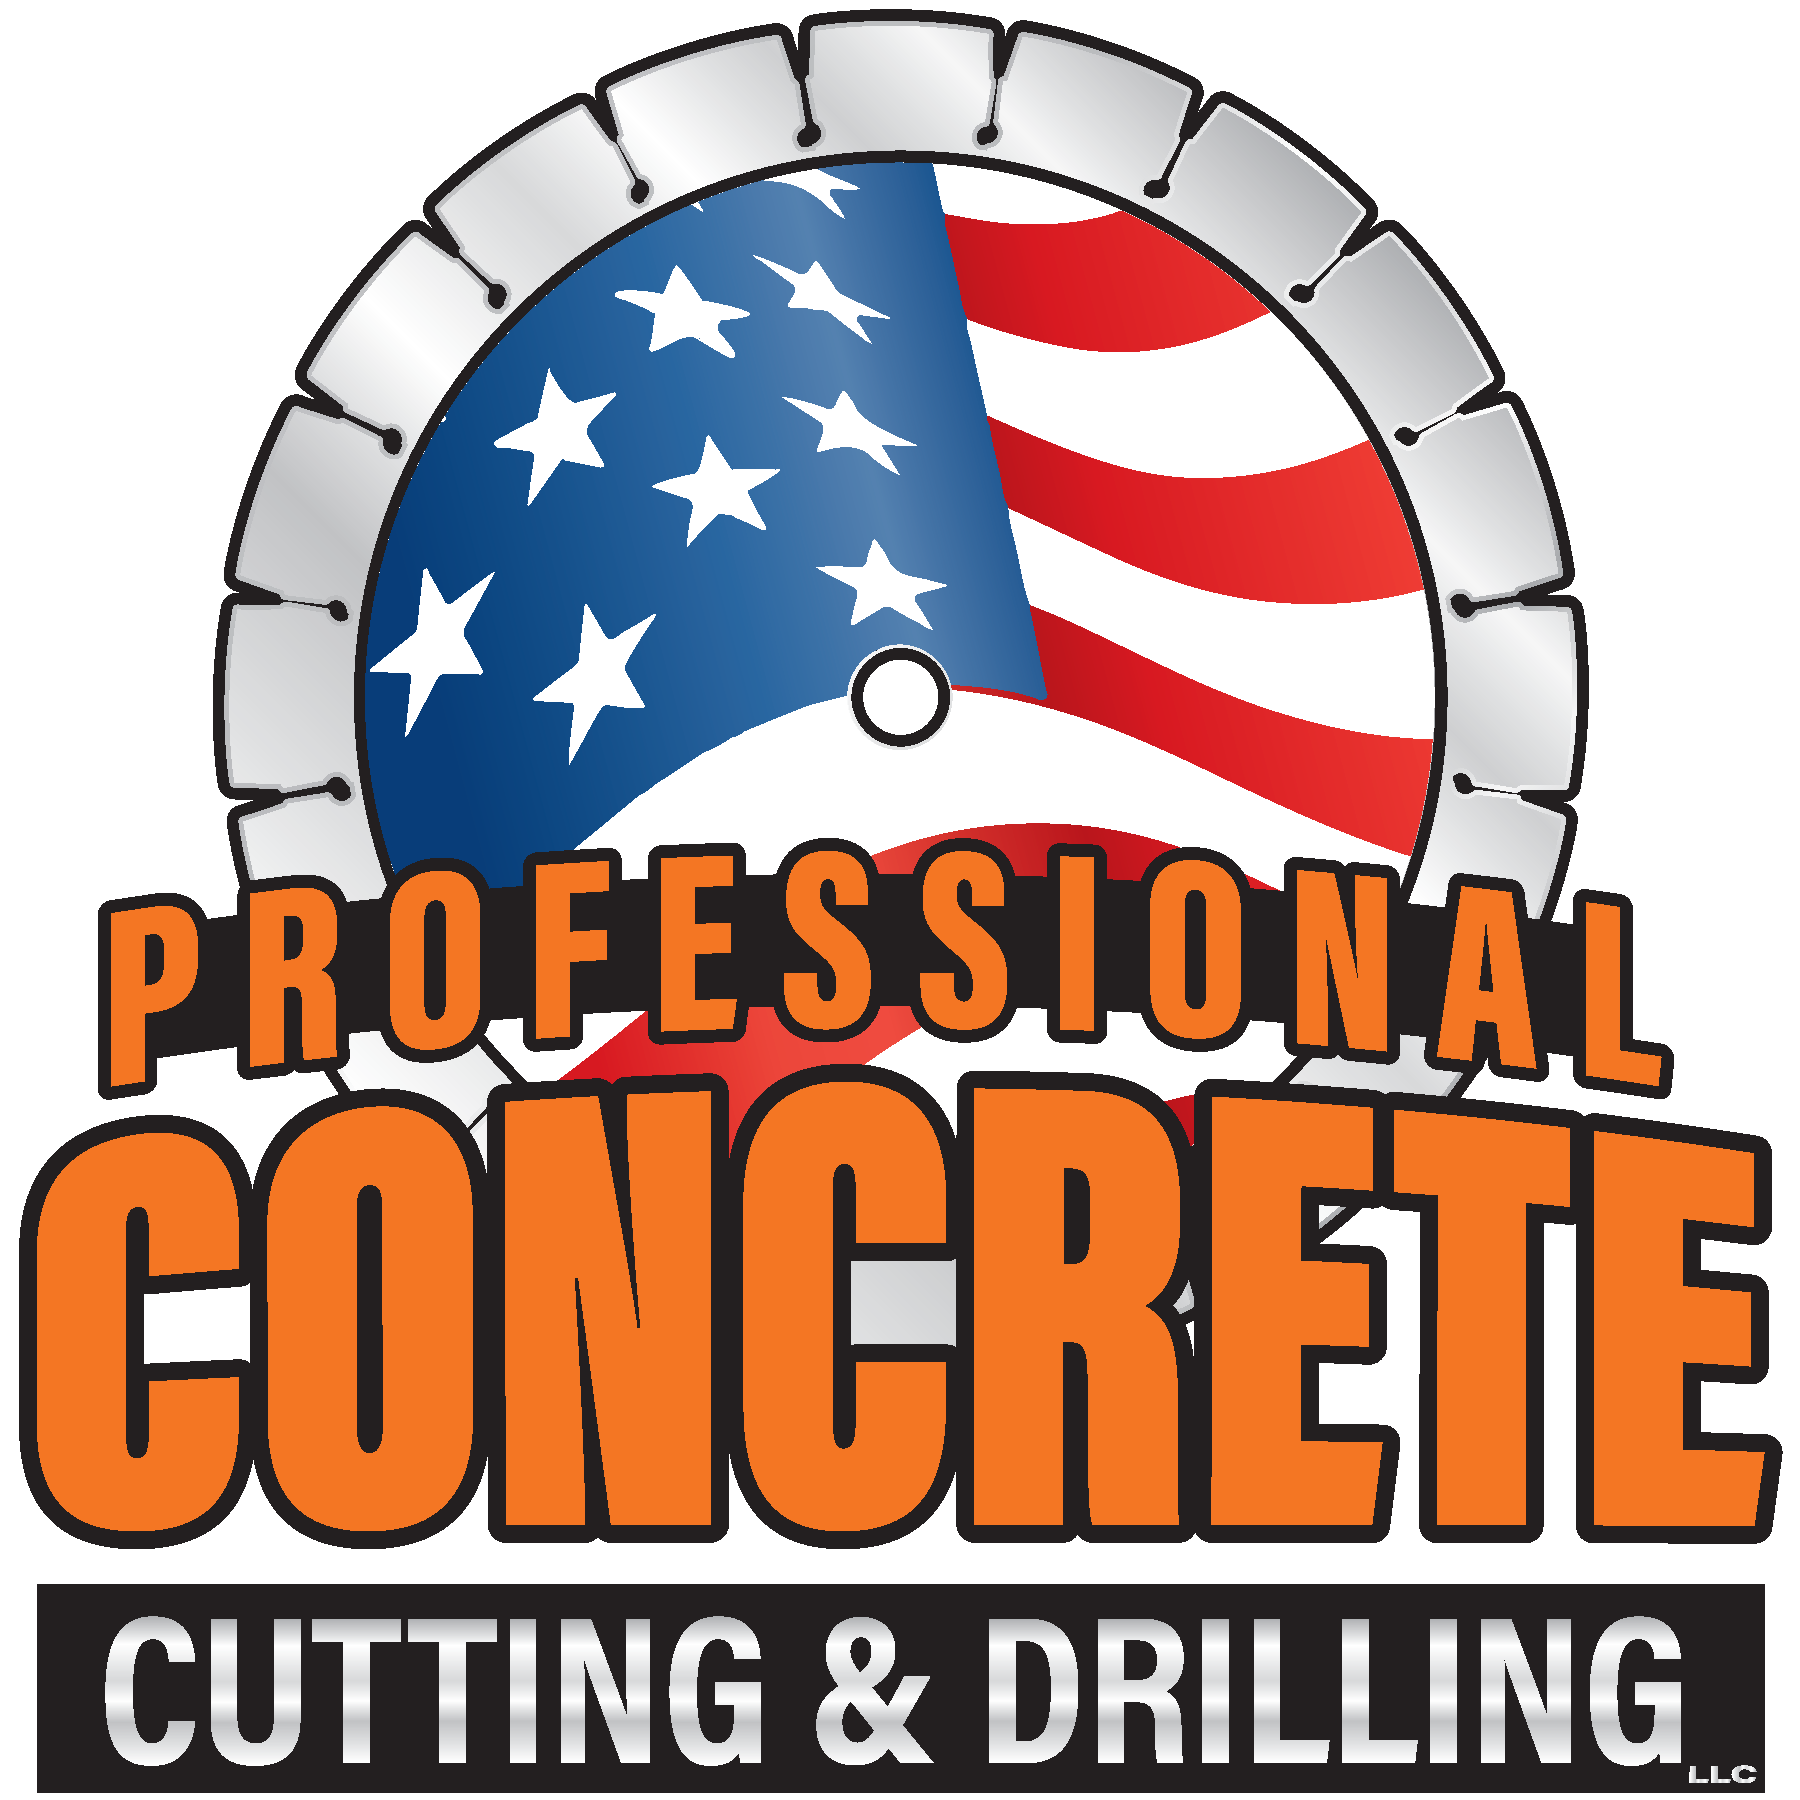 Professional Concrete Cutting & Drilling